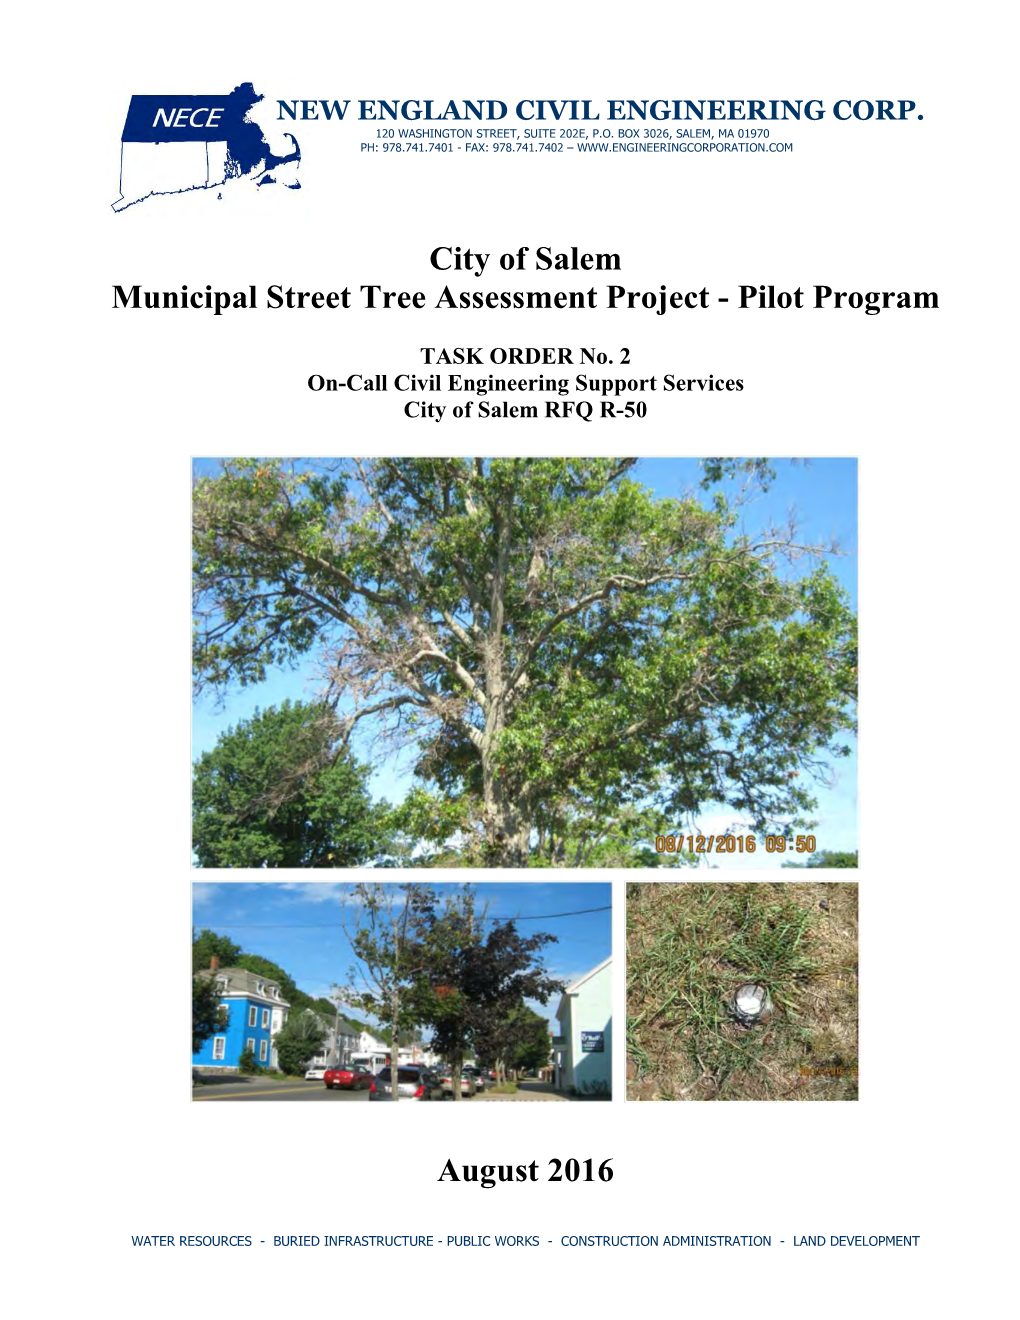 City of Salem Municipal Street Tree Assessment Project - Pilot Program